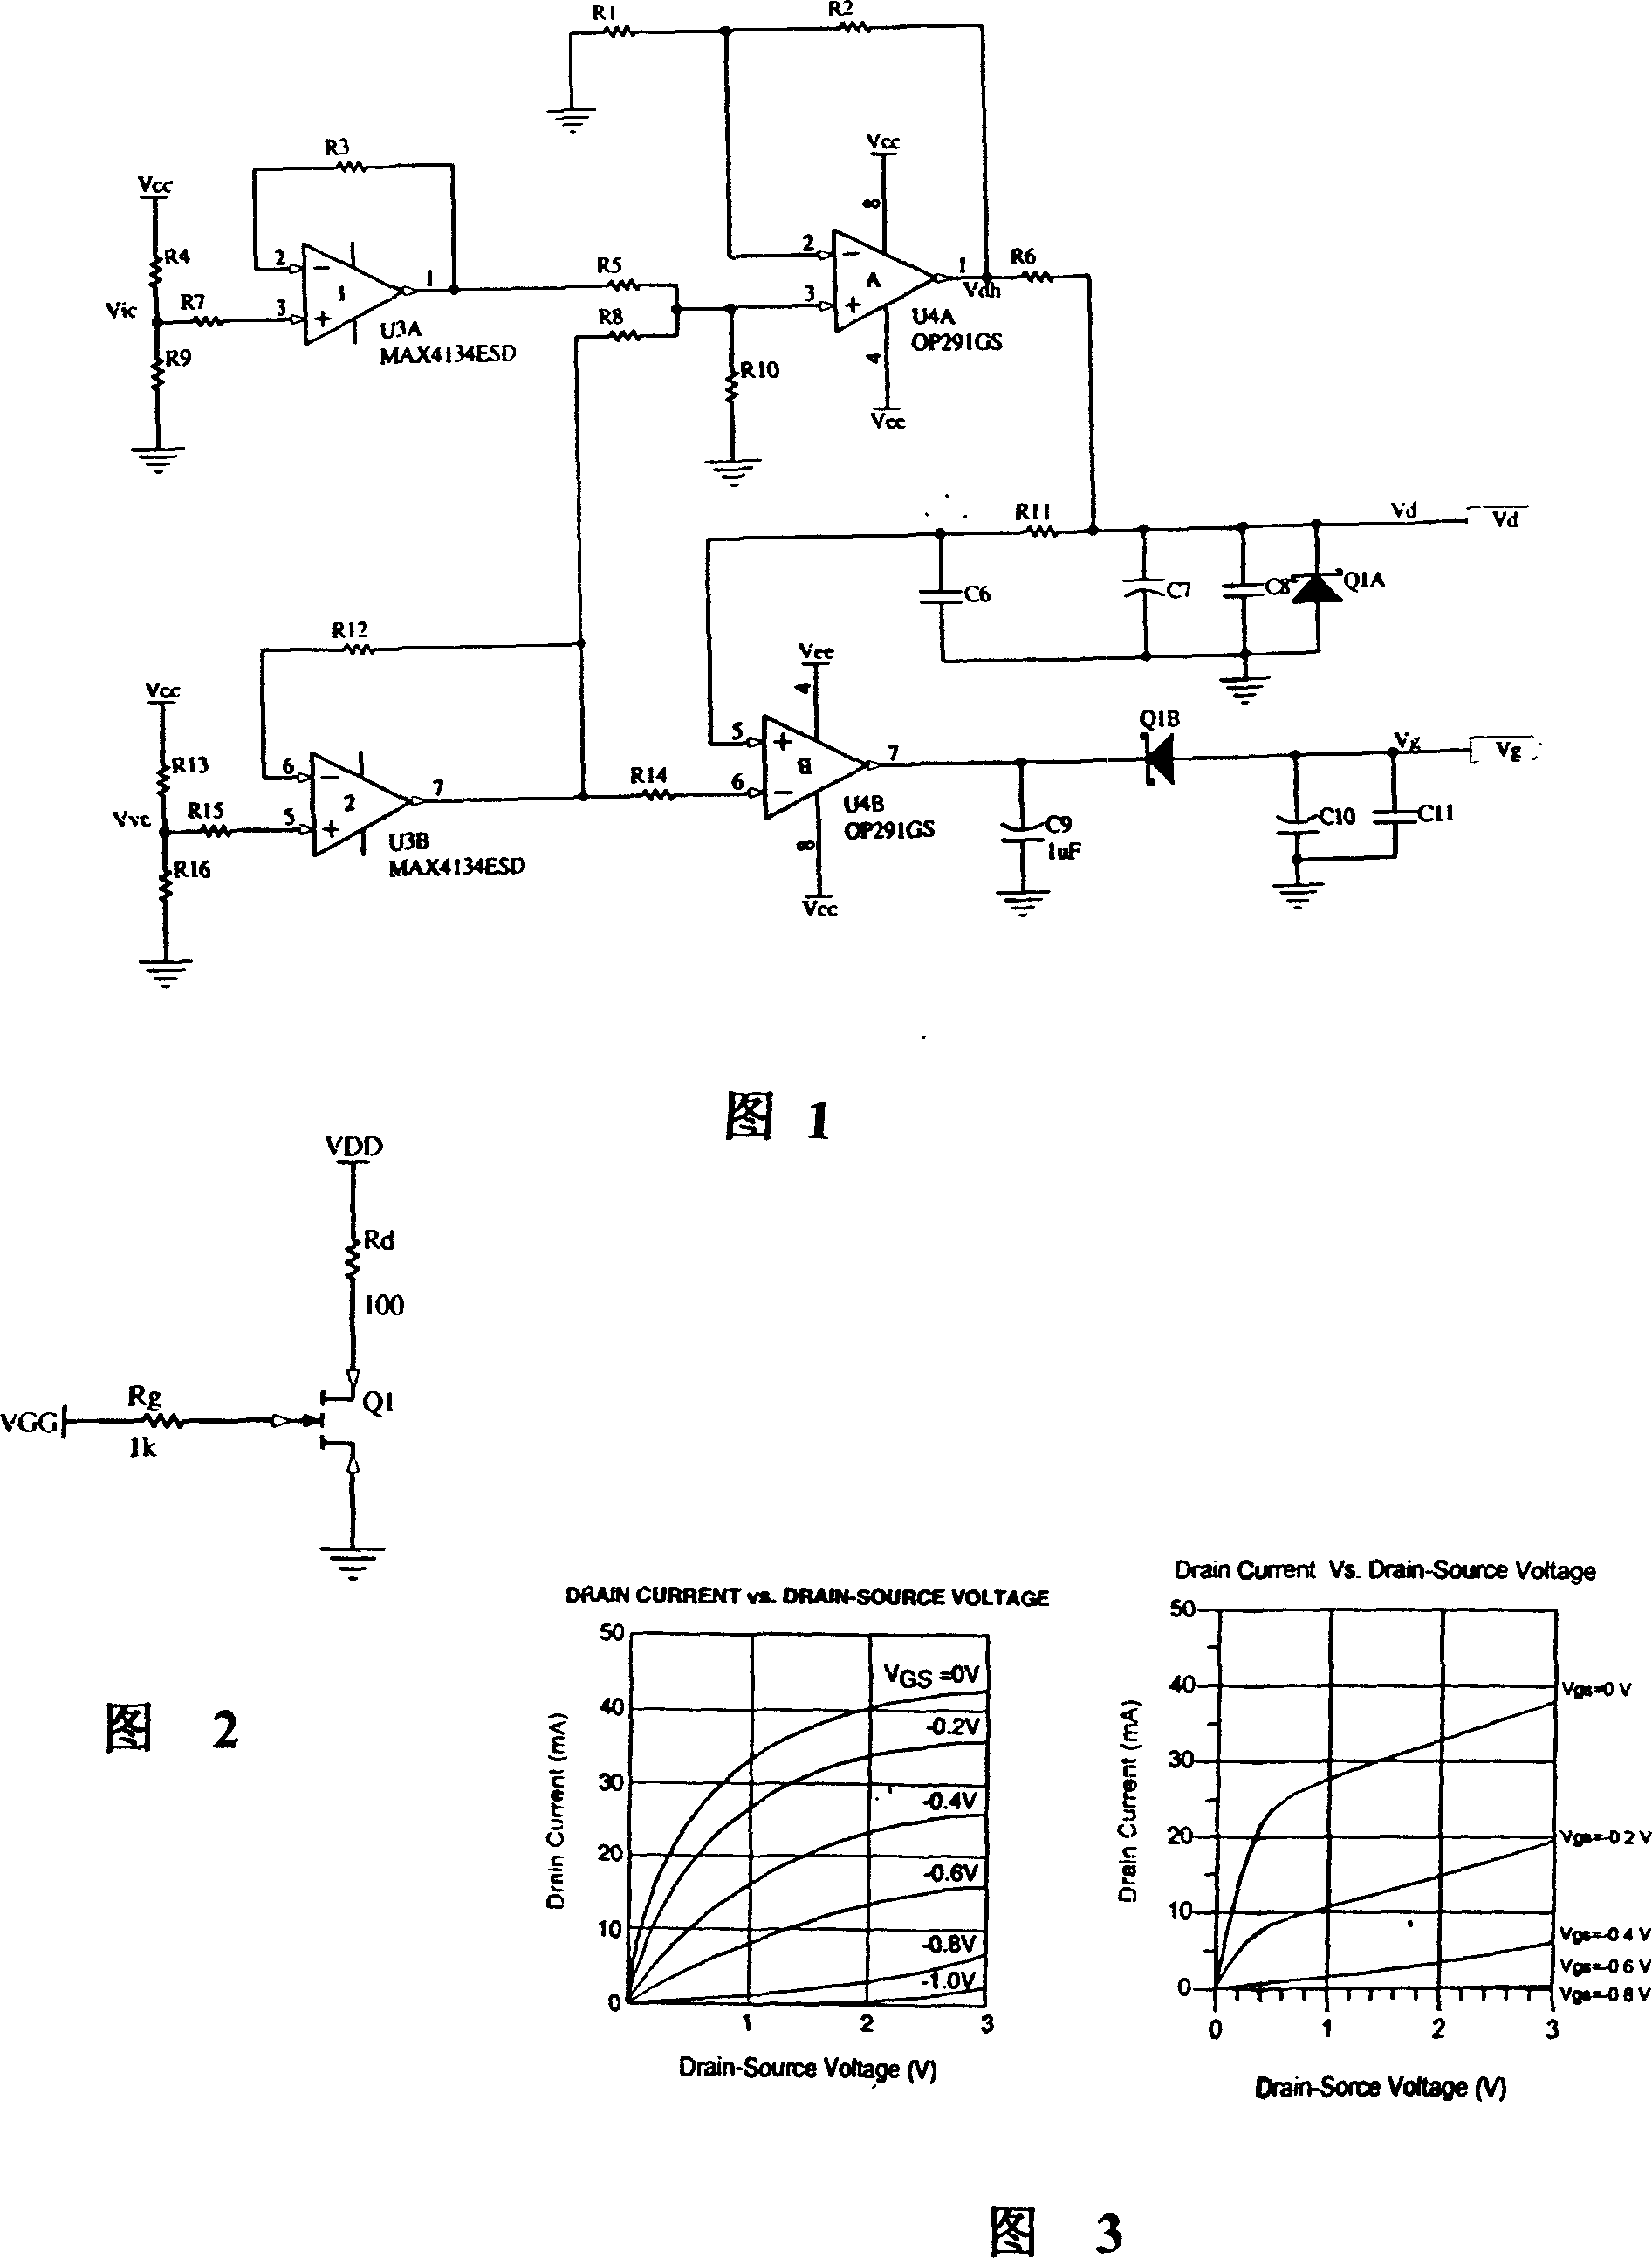 Power circuit of field effect tube microwave amplifier